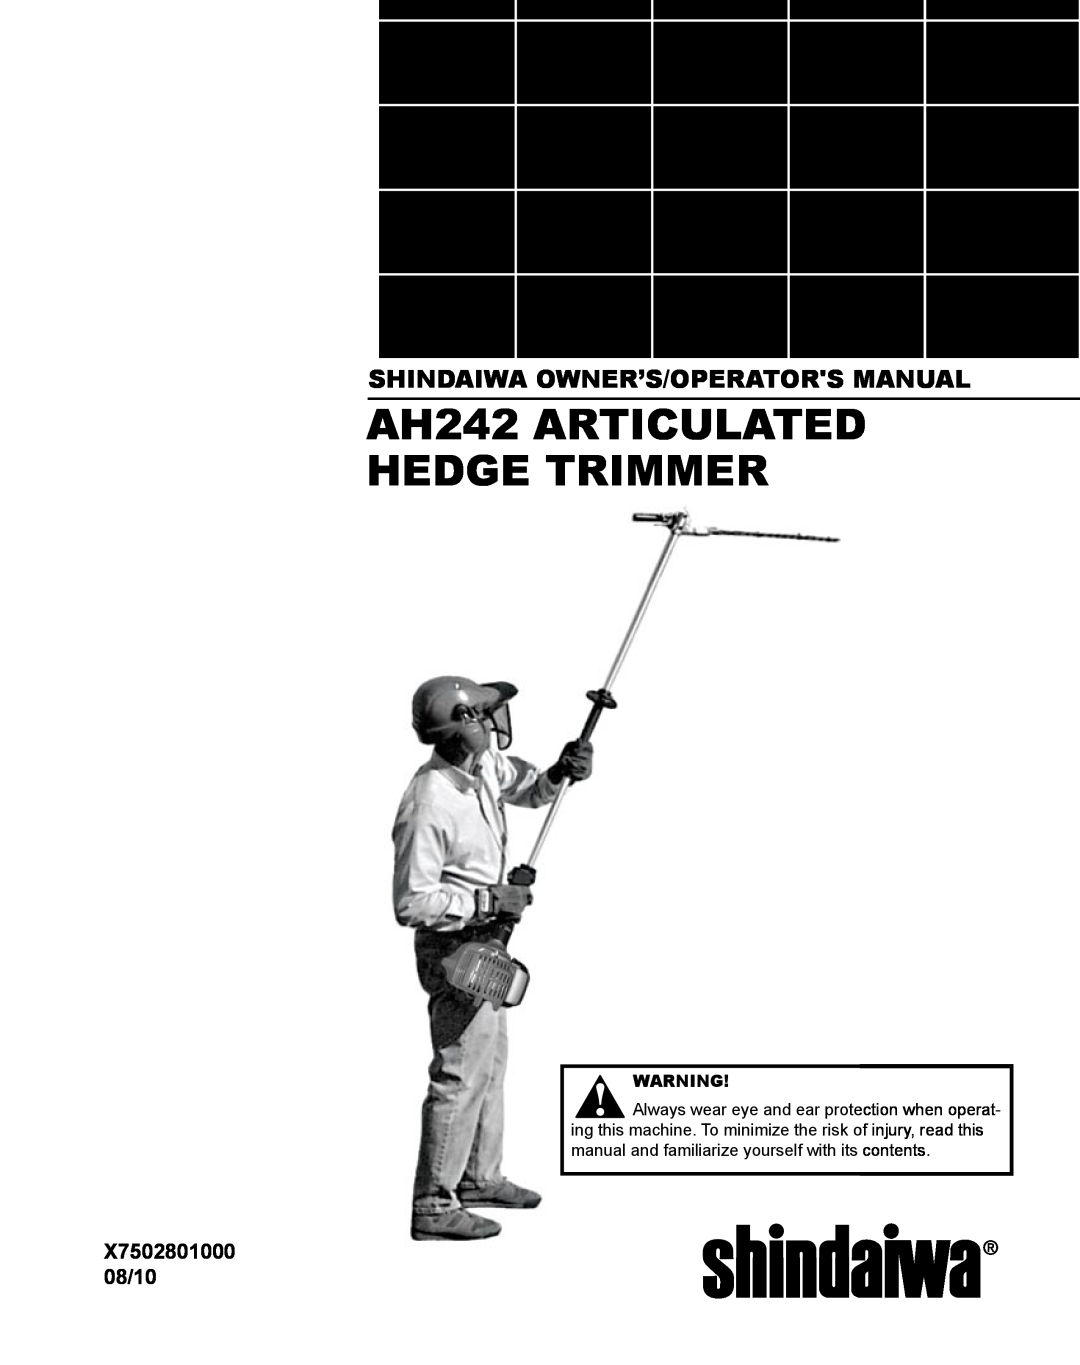 Shindaiwa AH242es manual Shindaiwa Owner’S/Operators Manual, X7502801000 08/10, AH242 ARTICULATED HEDGE TRIMMER 